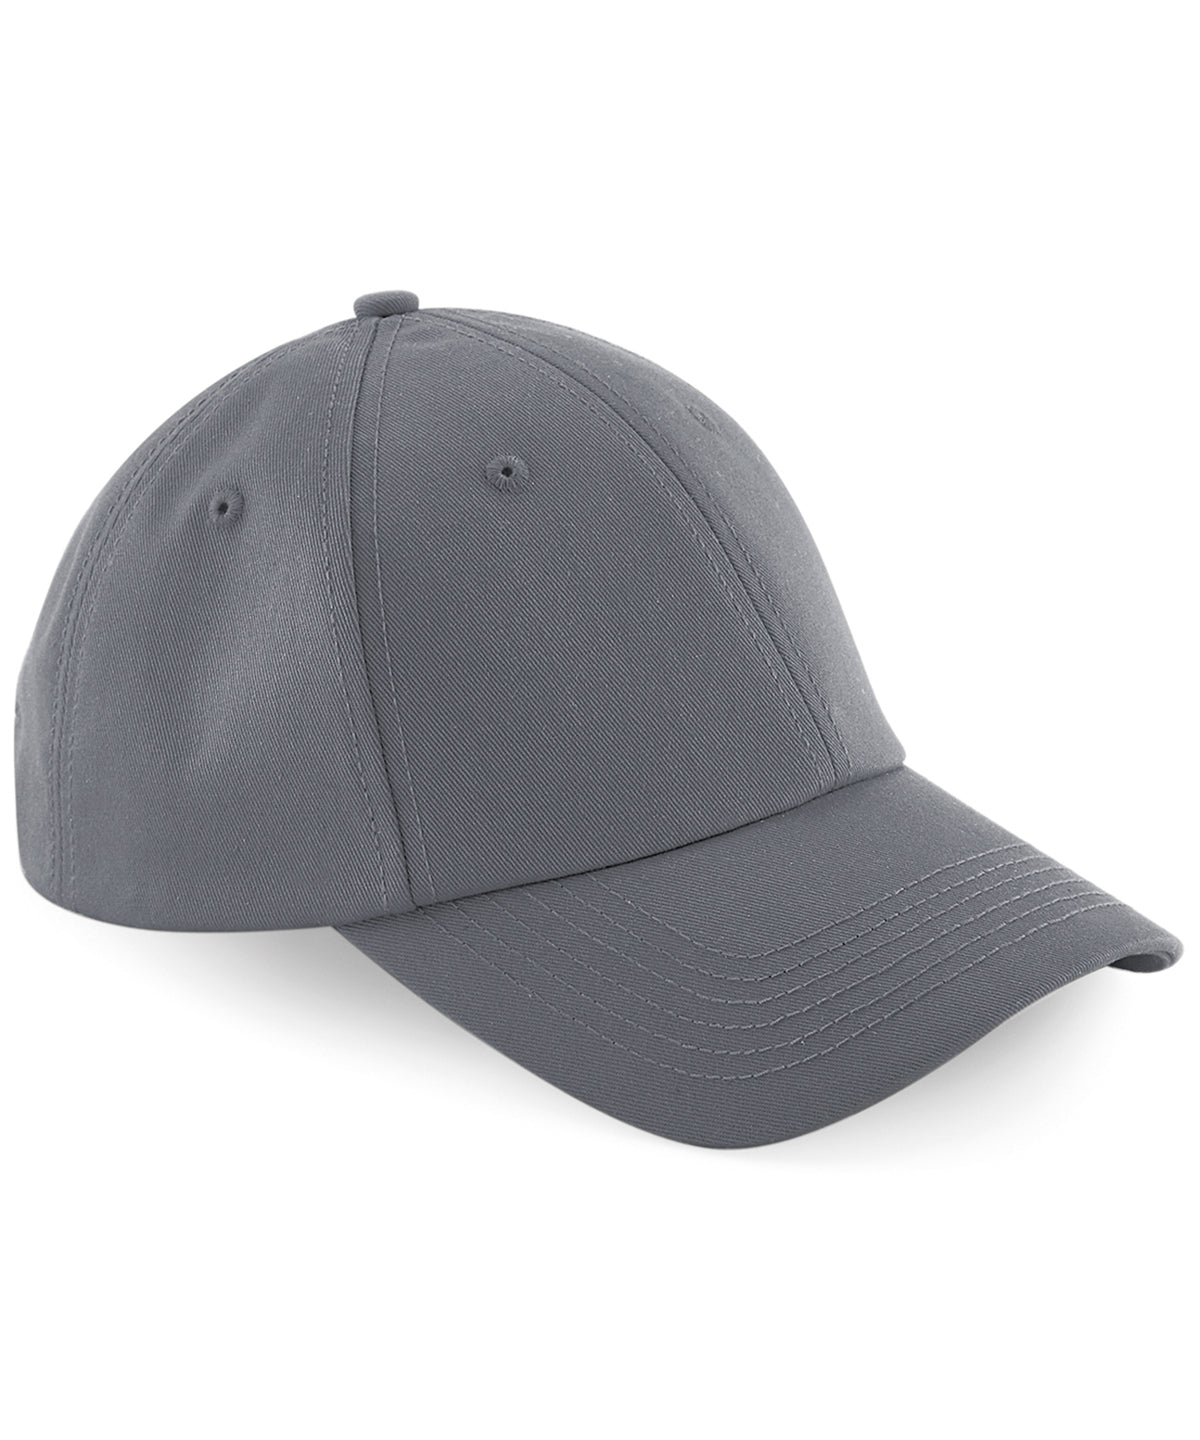 Personalised Caps - Mid Grey Beechfield Authentic baseball cap